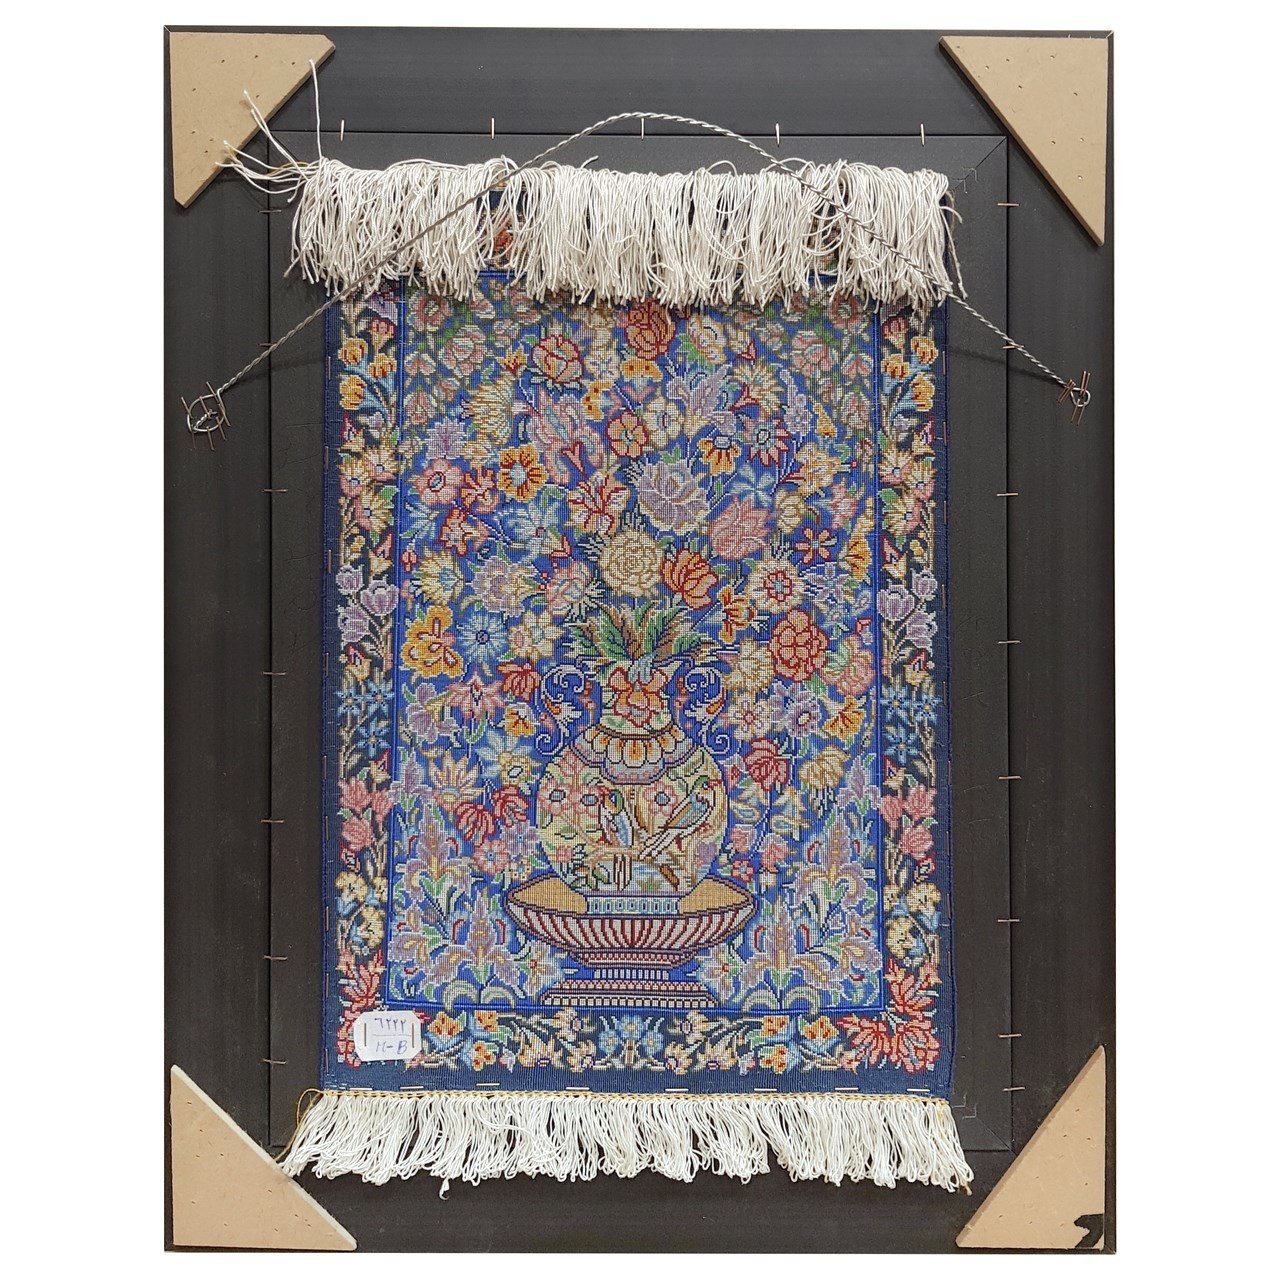 Pictorial Tabriz Carpet Ref: 911161